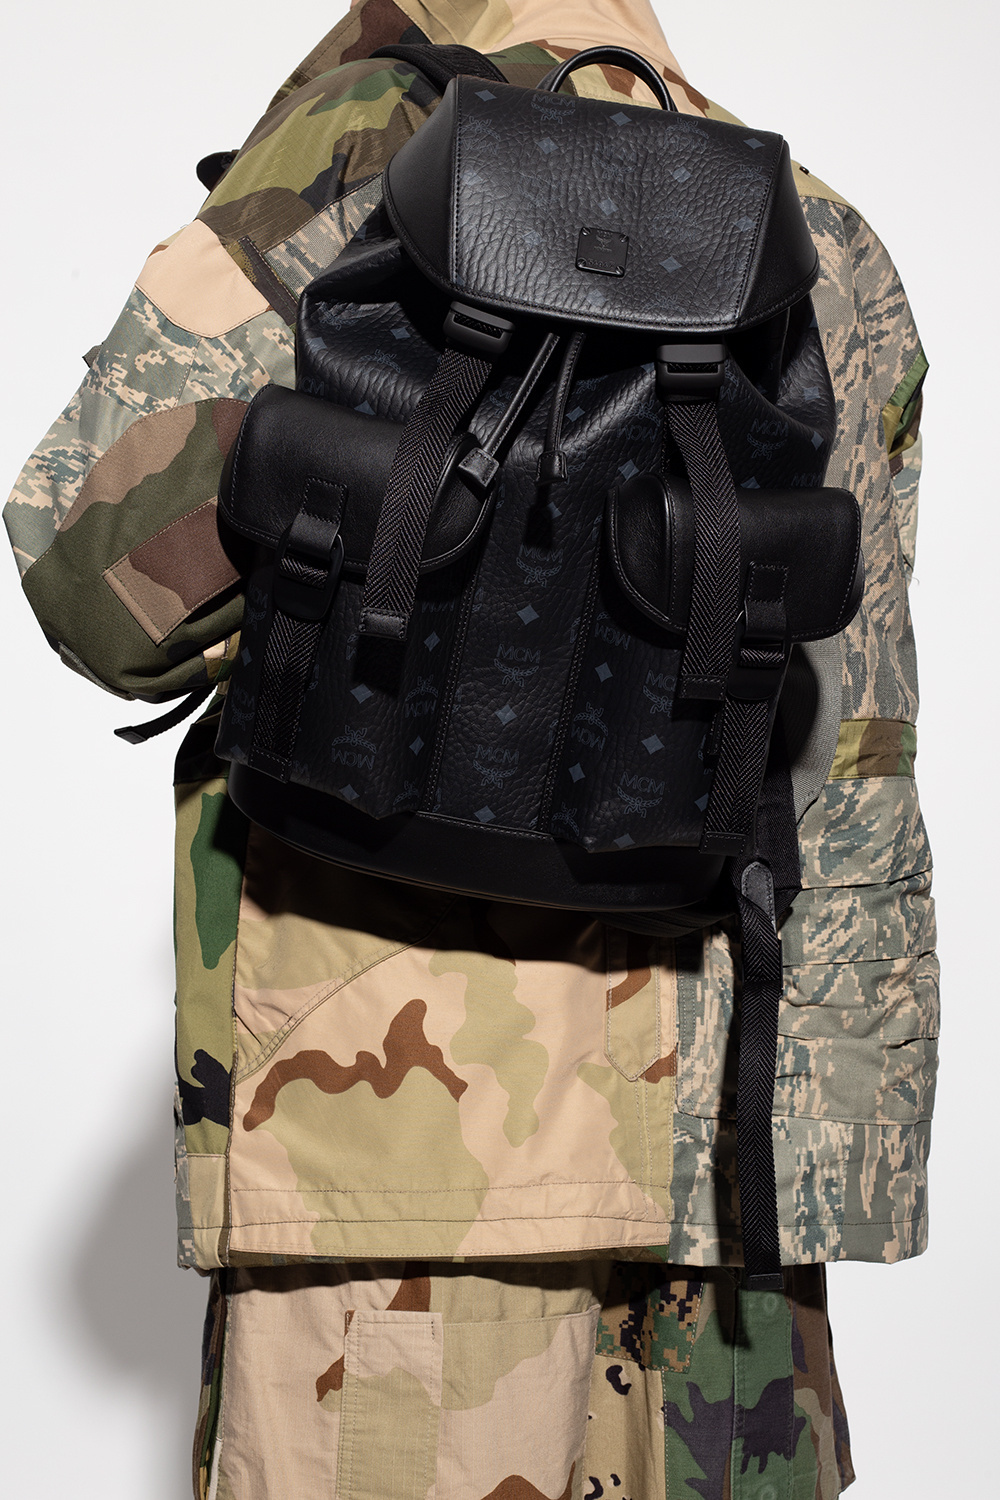 Mcm Brandenburg Medium Backpack - Black